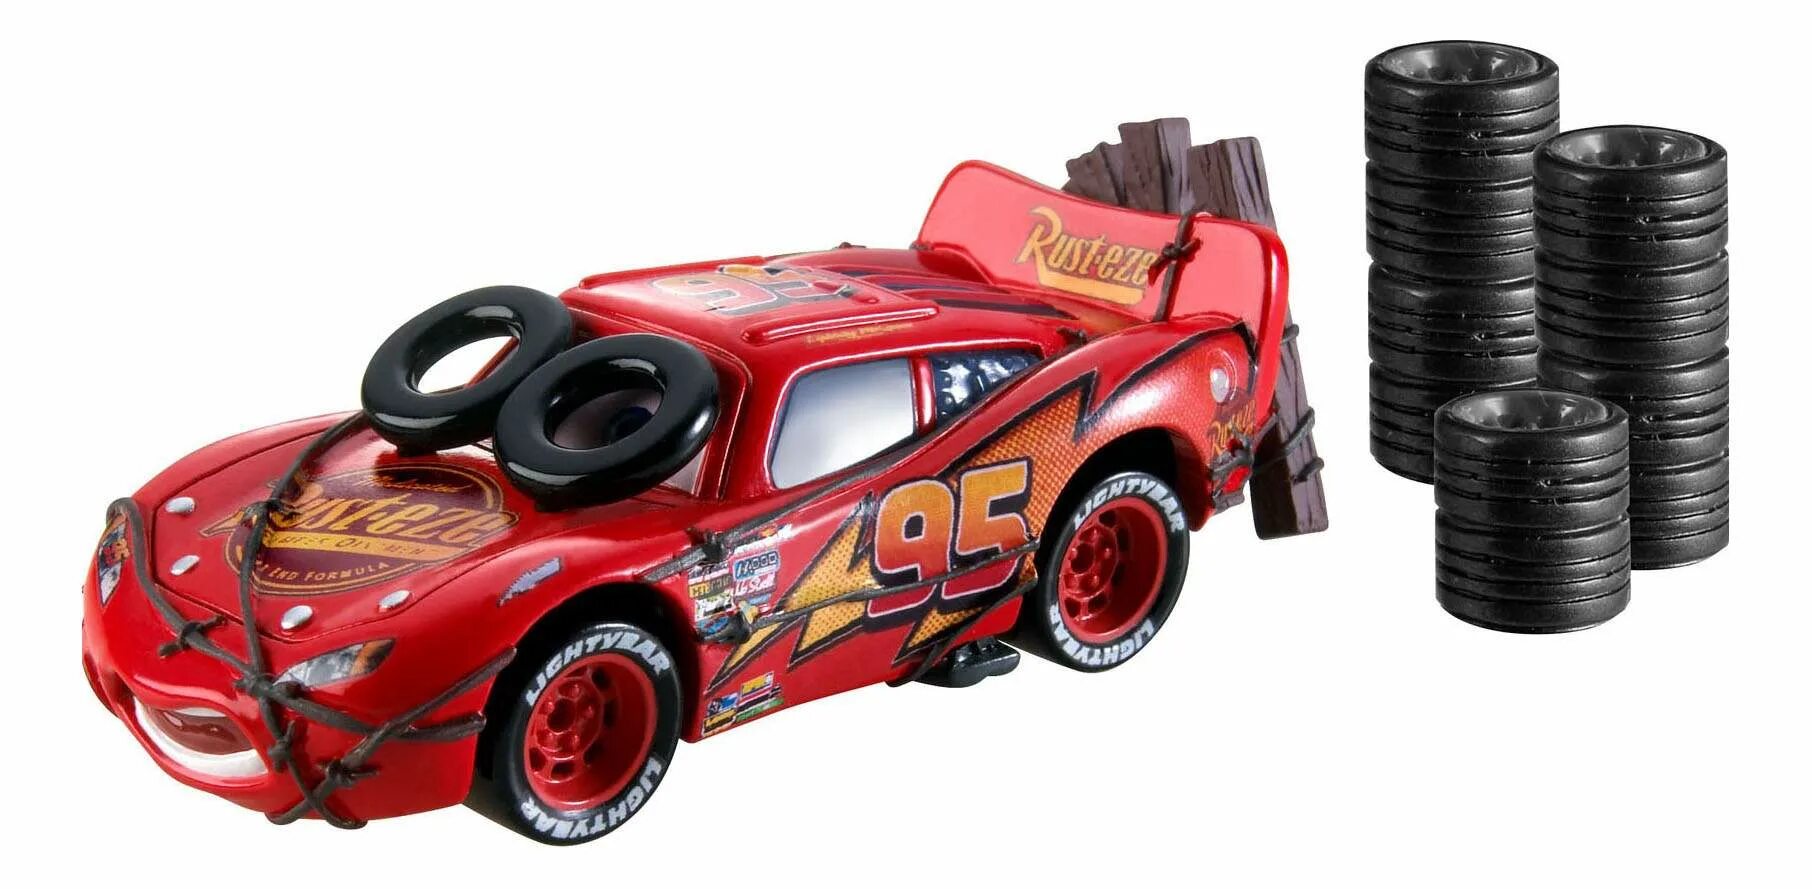 Cars daredevil garage. Молния Мак куин, Daredevil Garage Disney cars, Mattel. Гоночная машина Mattel cars Carbon Racers Lightning MCQUEEN (dhn00/dhn01) 1:43 7.5 см. Гоночная машина Mattel Тачки модель коллекционная молния Маккуин (dhd60/dhd61) 7 см. Гоночная машина Mattel Тачки 3 молния Маккуин.